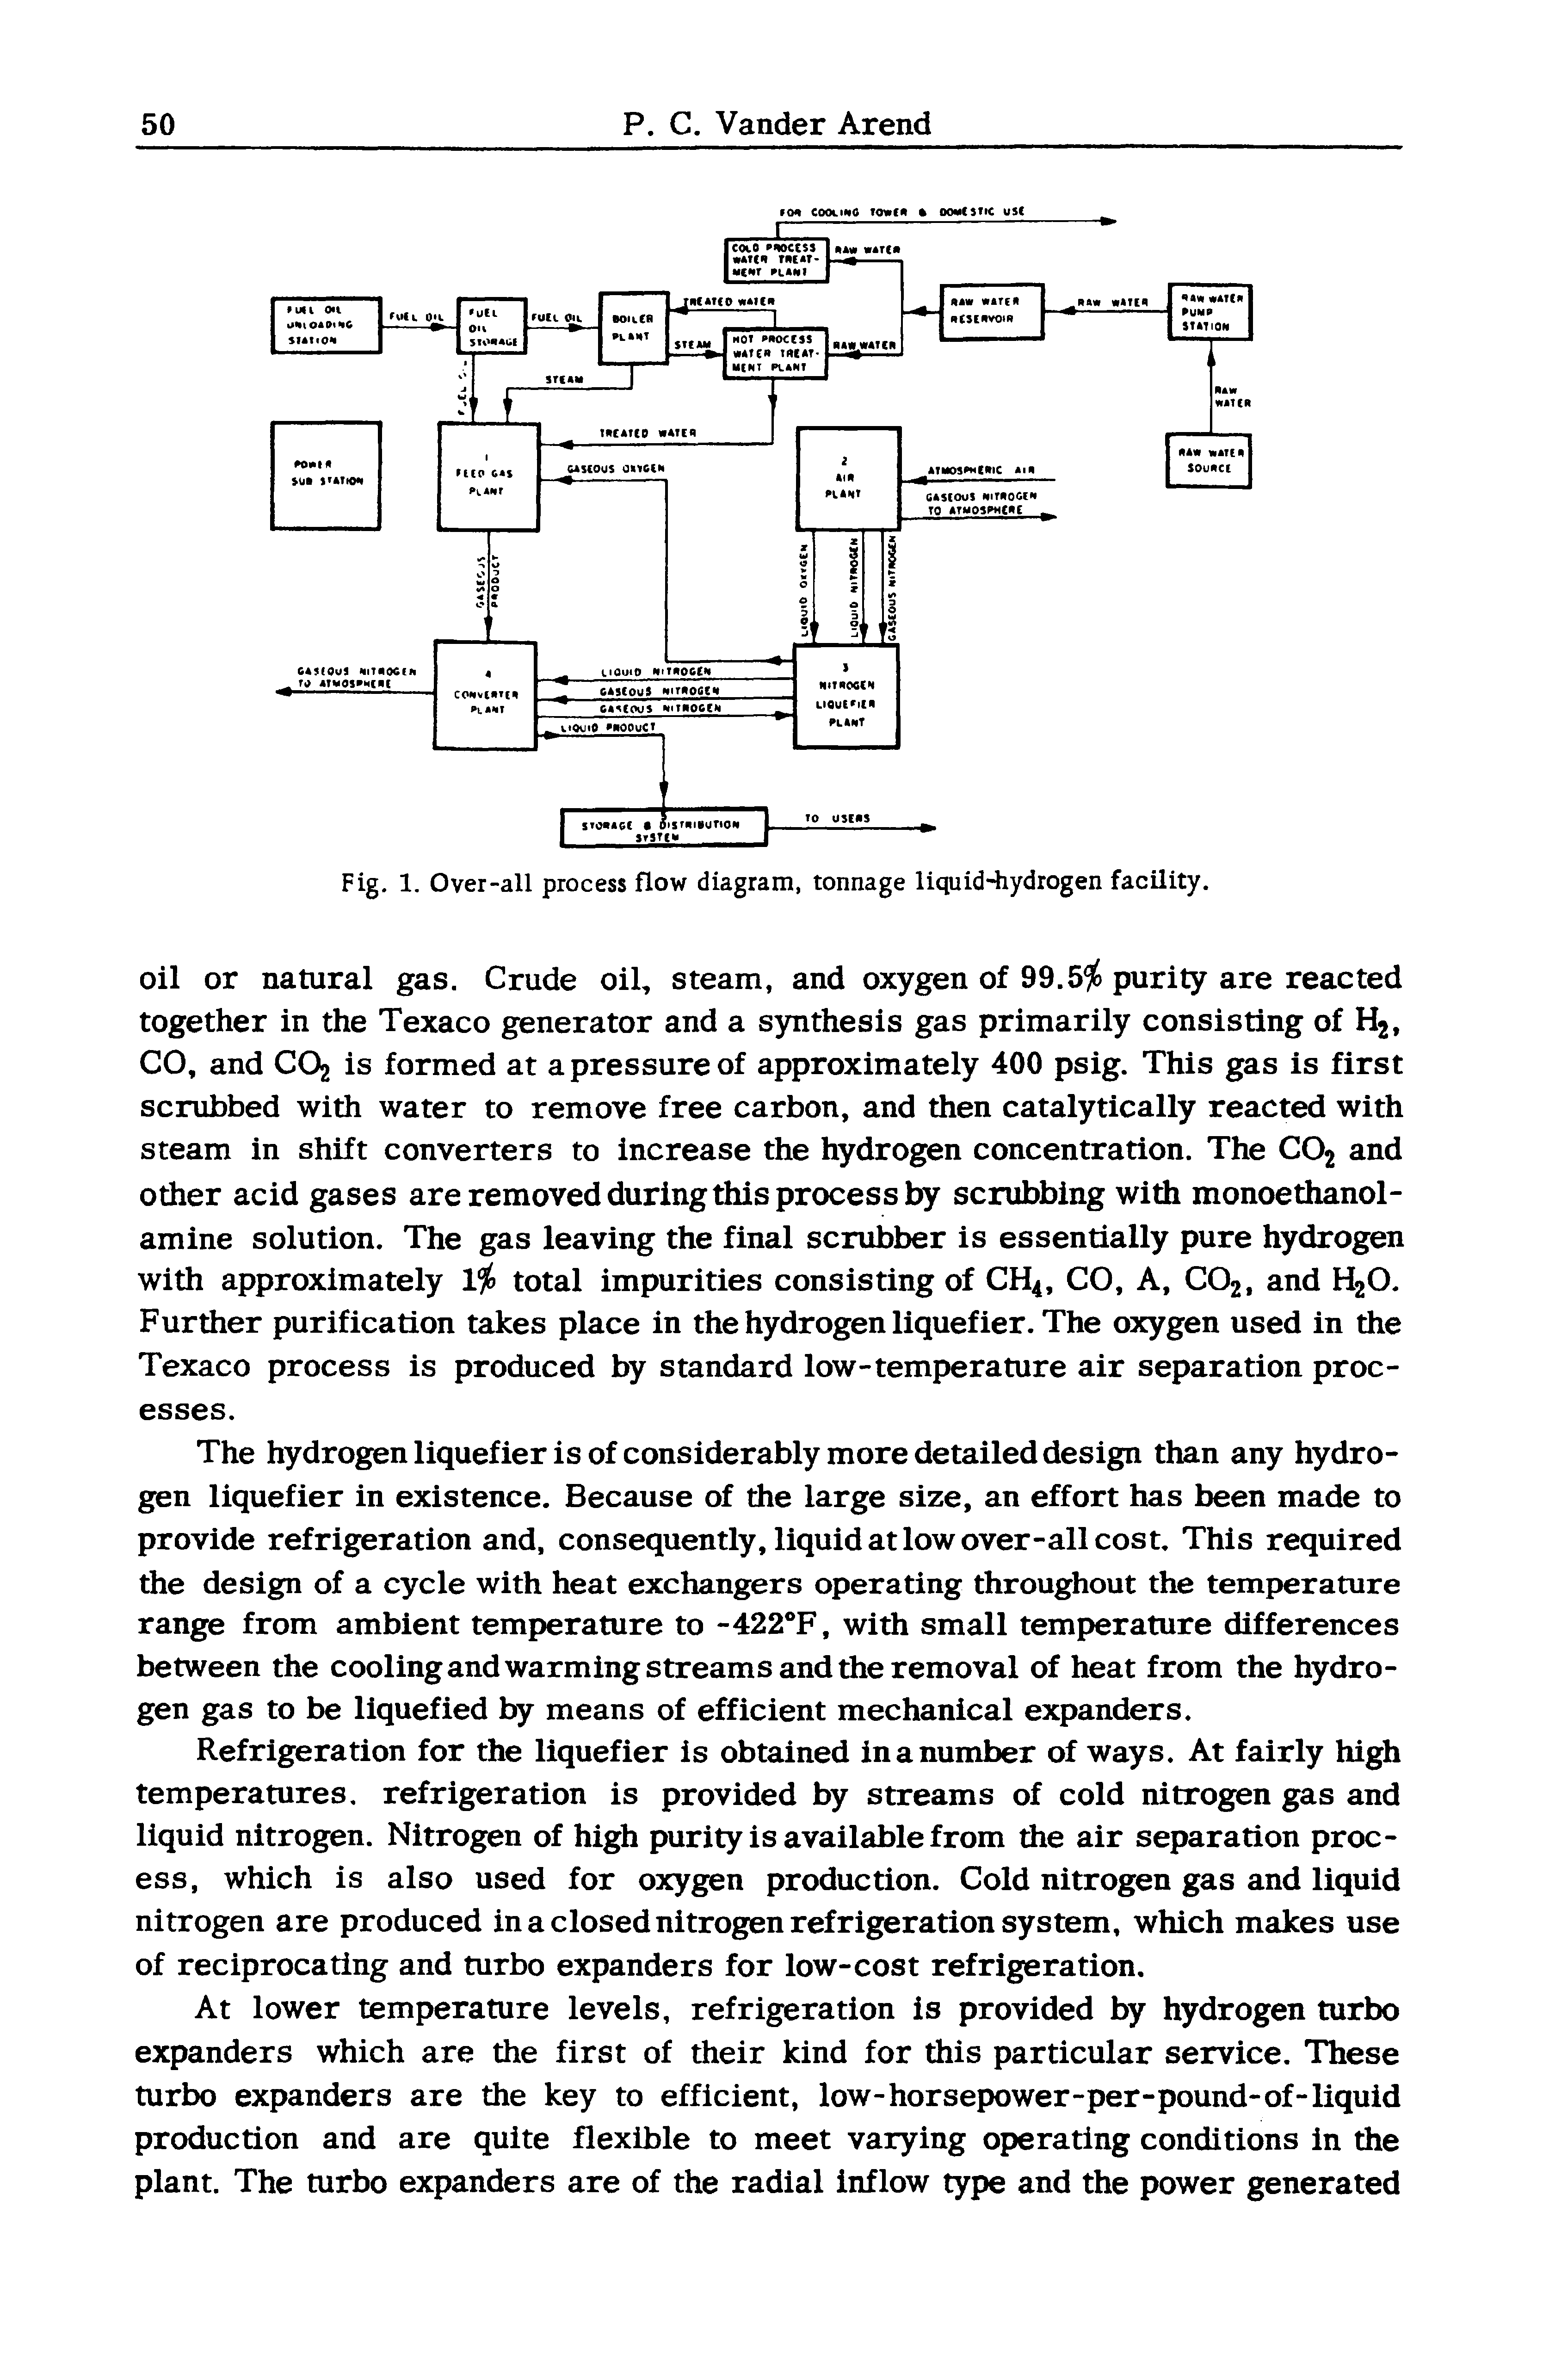 Fig. 1. Over-all process flow diagram, tonnage liquid-hydrogen facility.